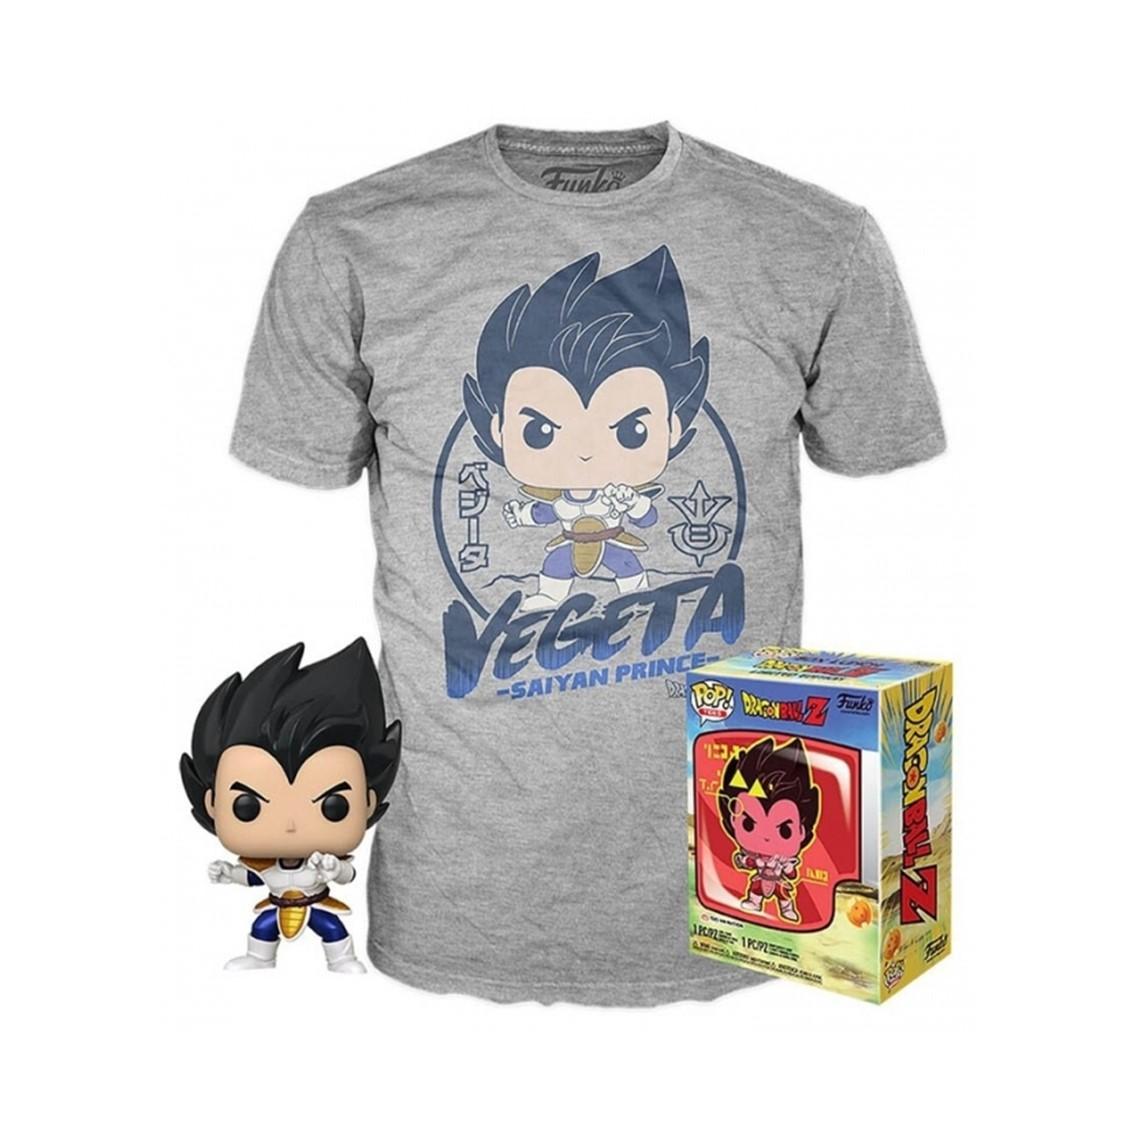   Pop & Tee Dragon Ball Z Vegeta  Funko+Camiseta Talla M